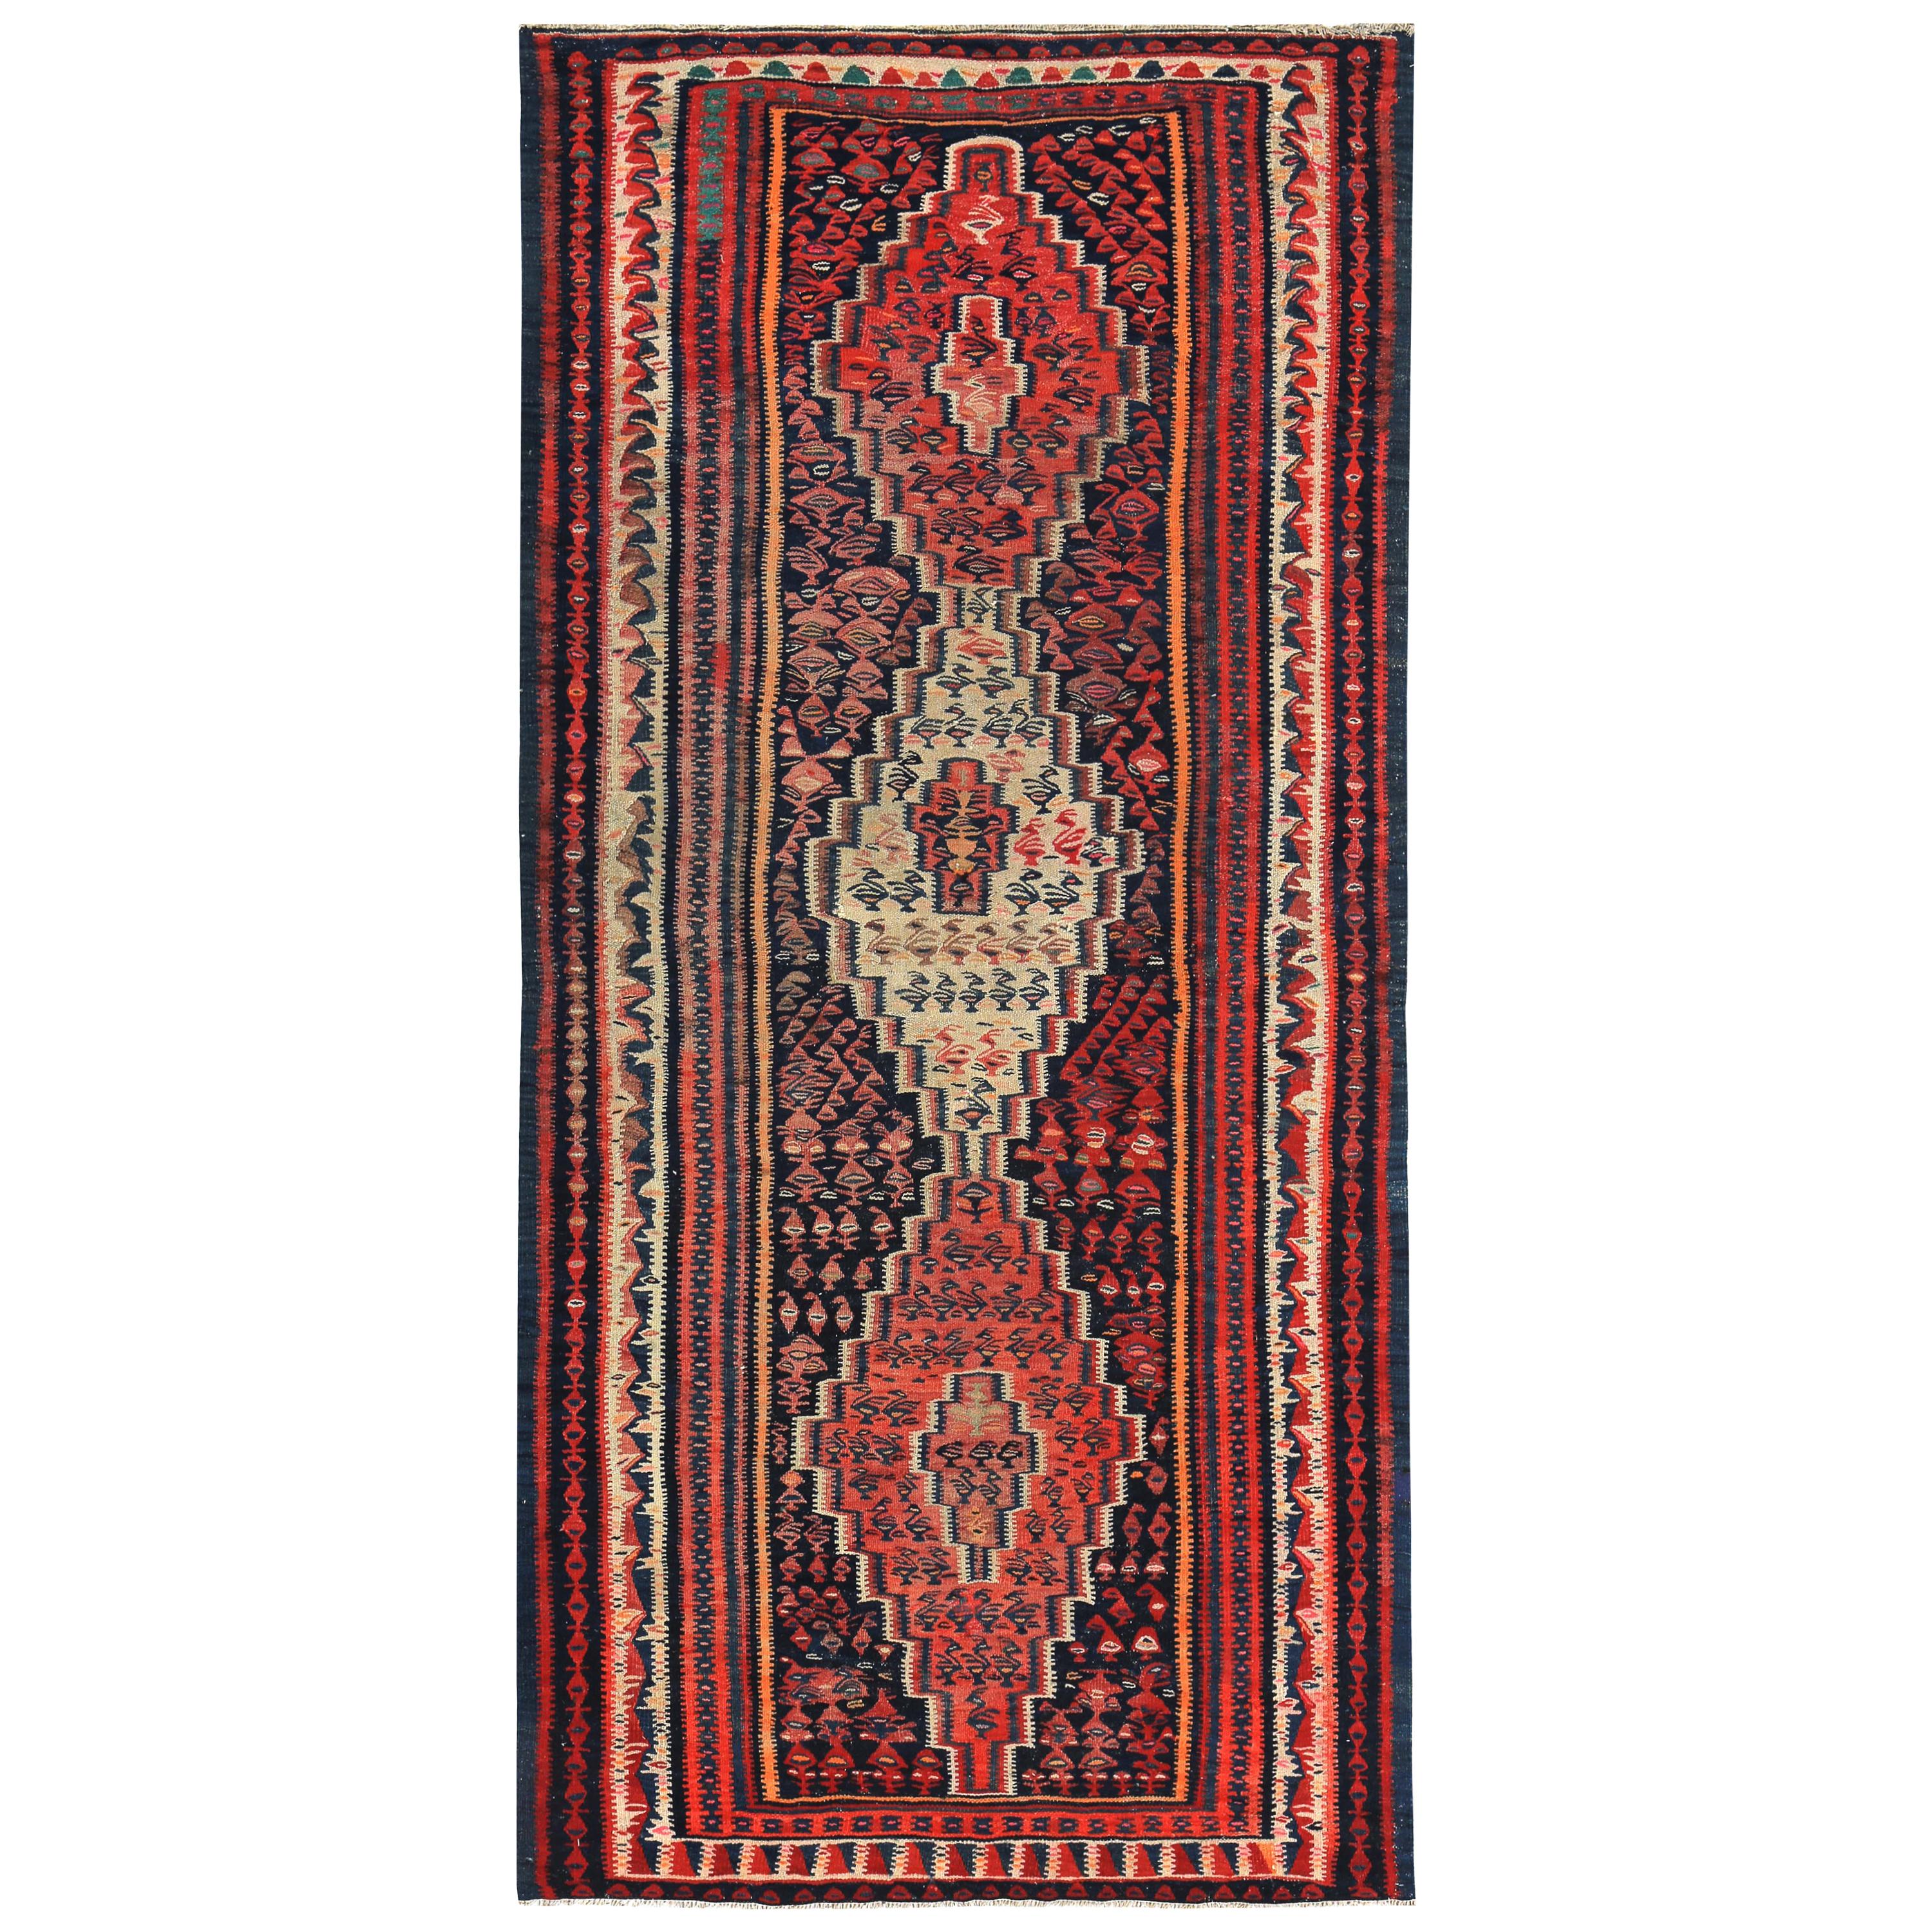 Modern Turkish Kilim Rug with Red, Blue and Orange Tribal Stripes